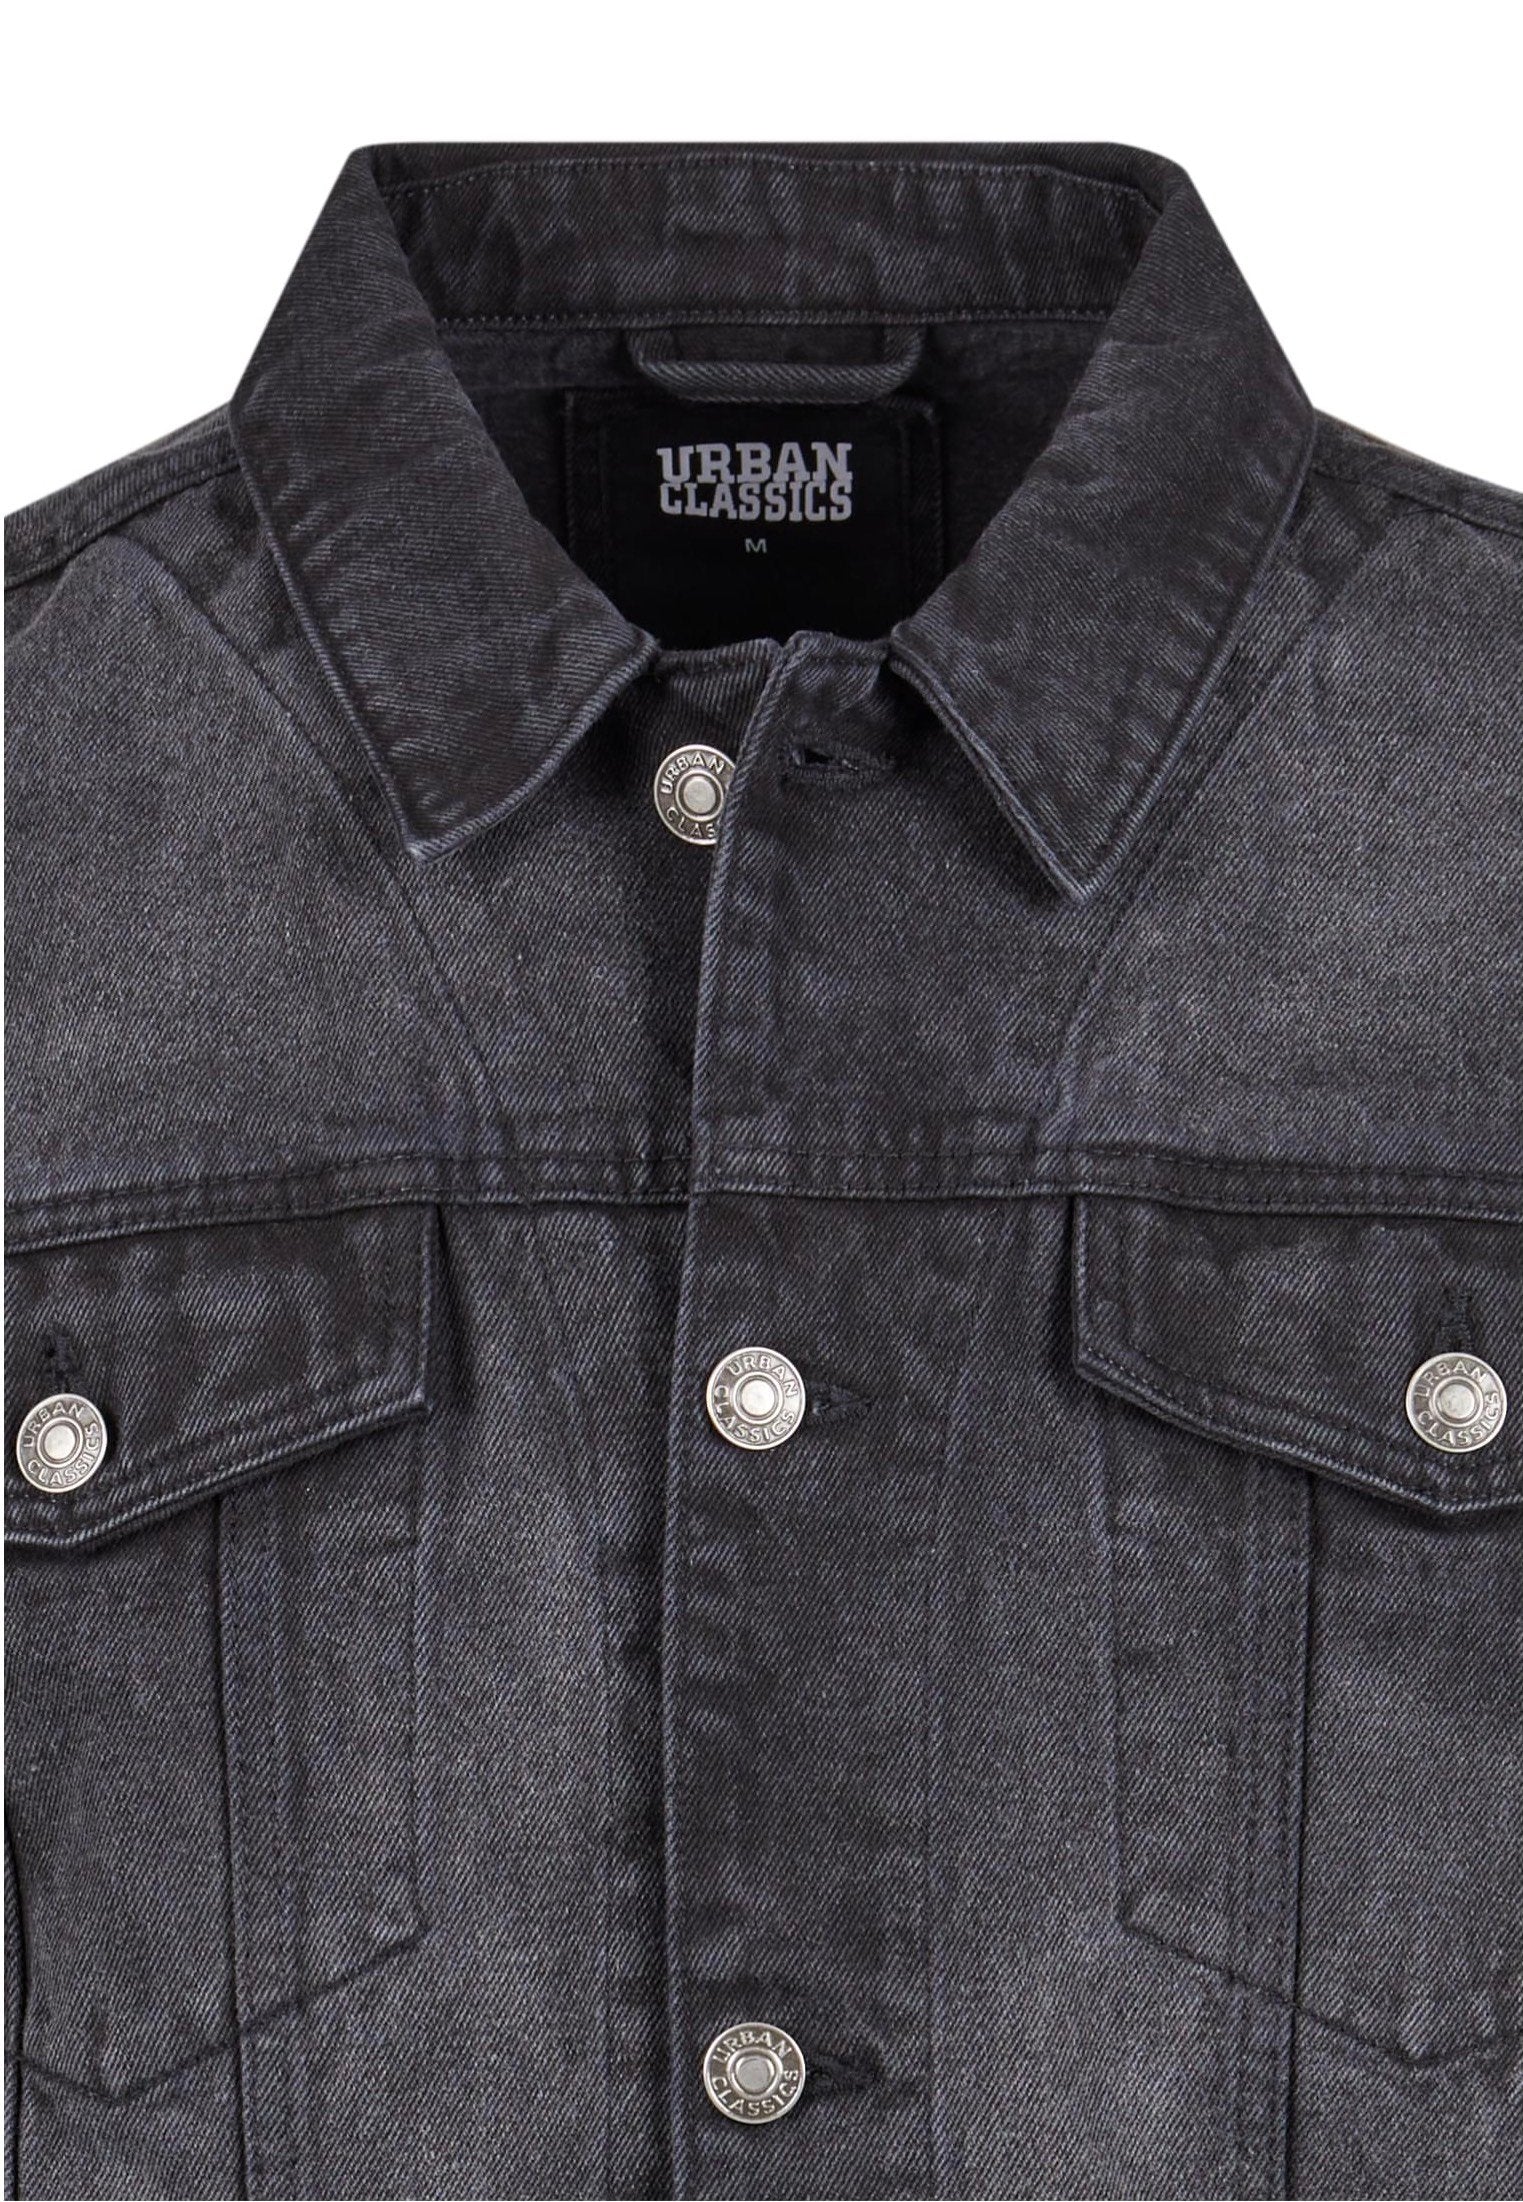 Urban Classics - Heavy Ounce Boxy Denim Black Washed - Jeans Jacket